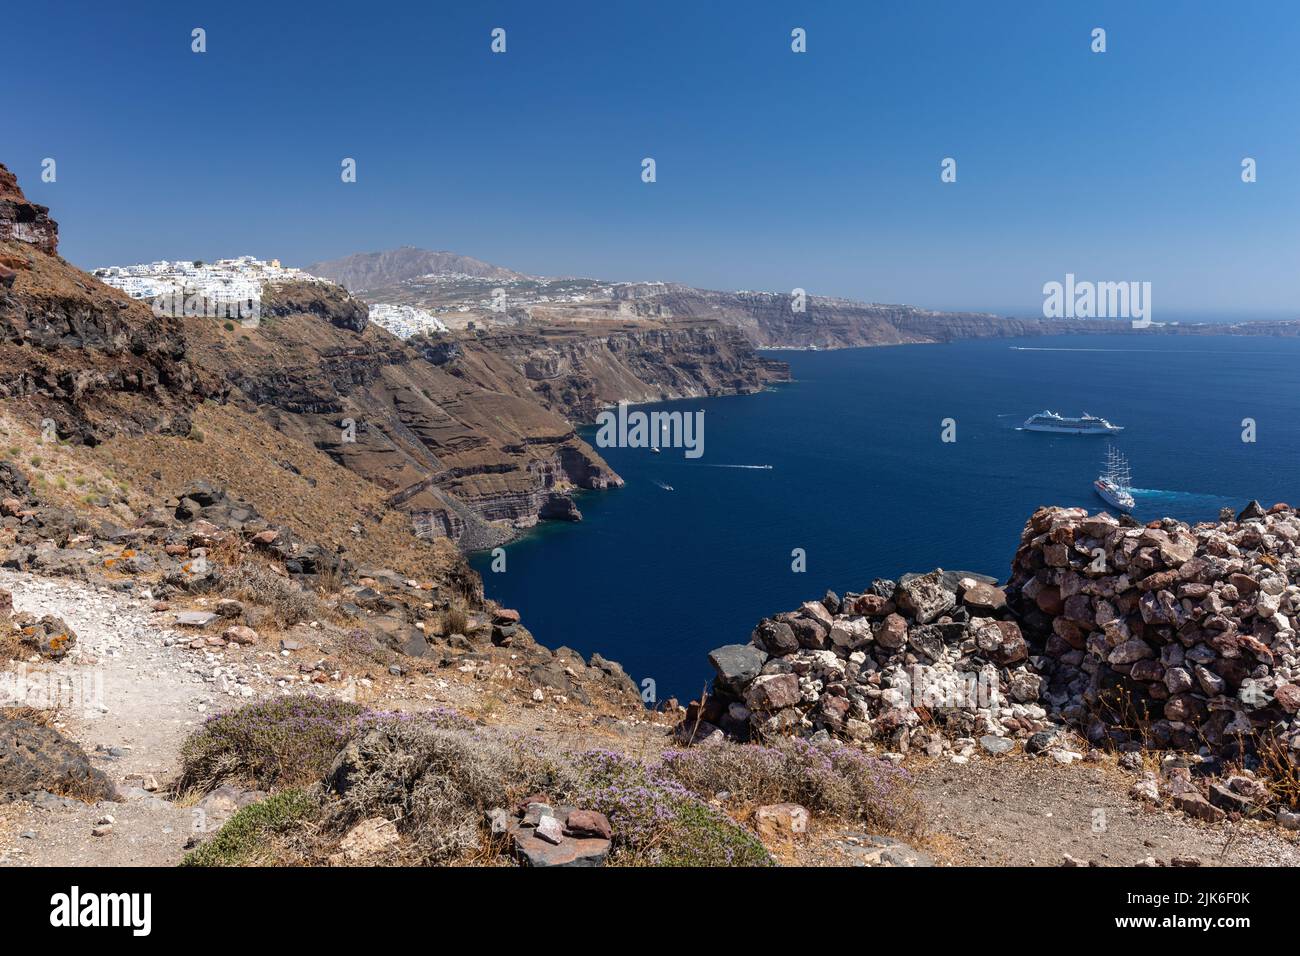 View from Skaros Rock of the volcanic caldera landscape, Fira town and the Aegean Sea, Imerovigli, Santorini, Greece, Europe Stock Photo